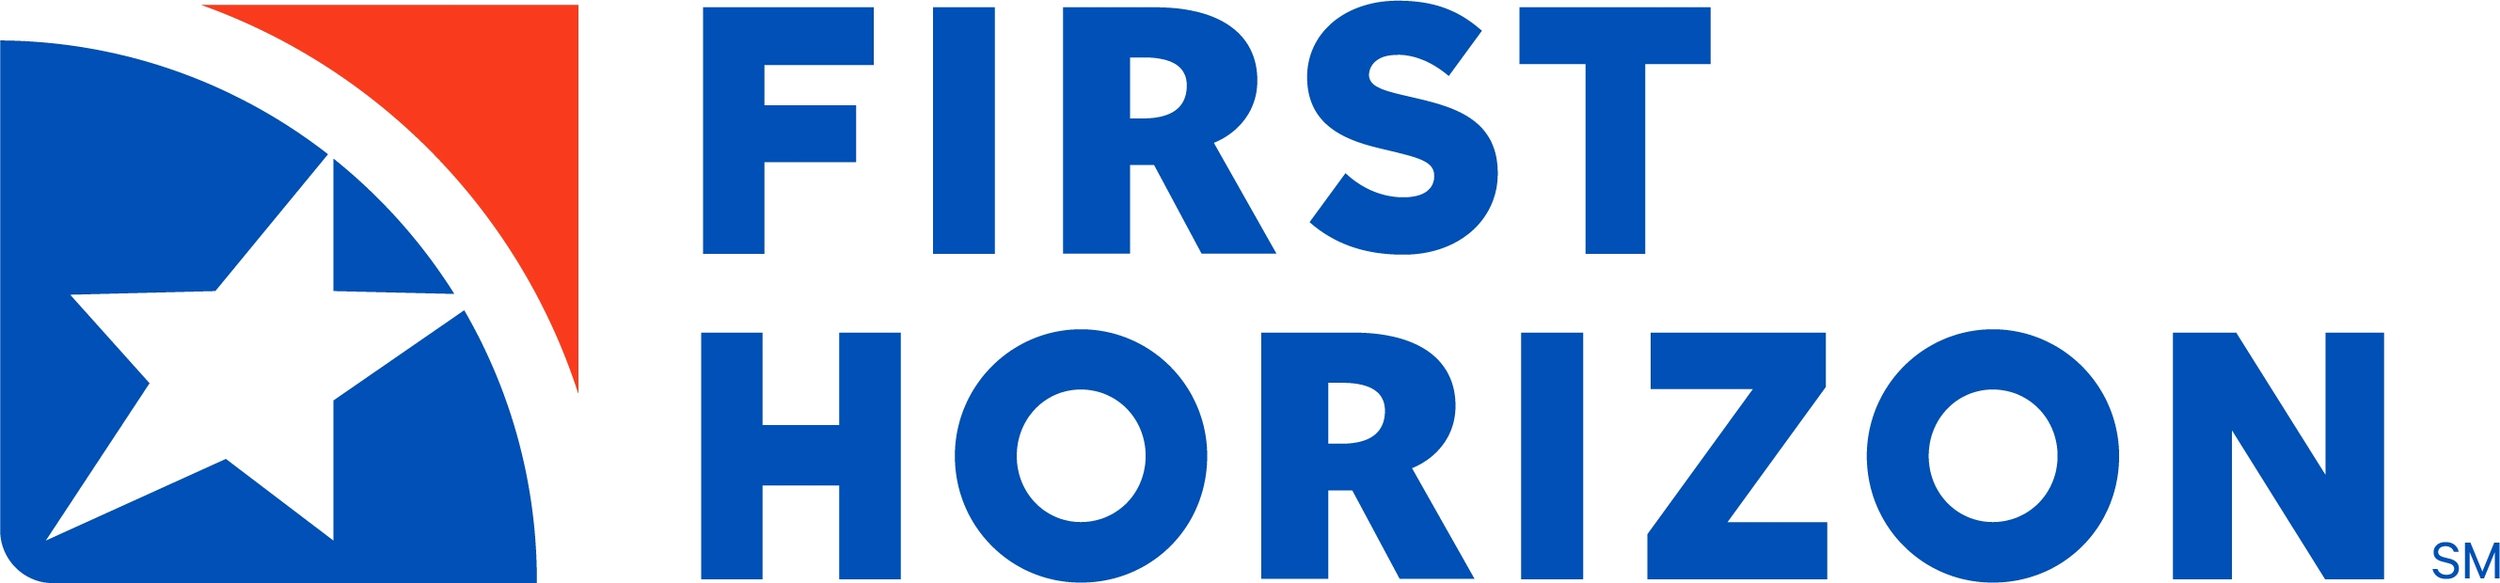 First-Horizon-new-logo.jpg